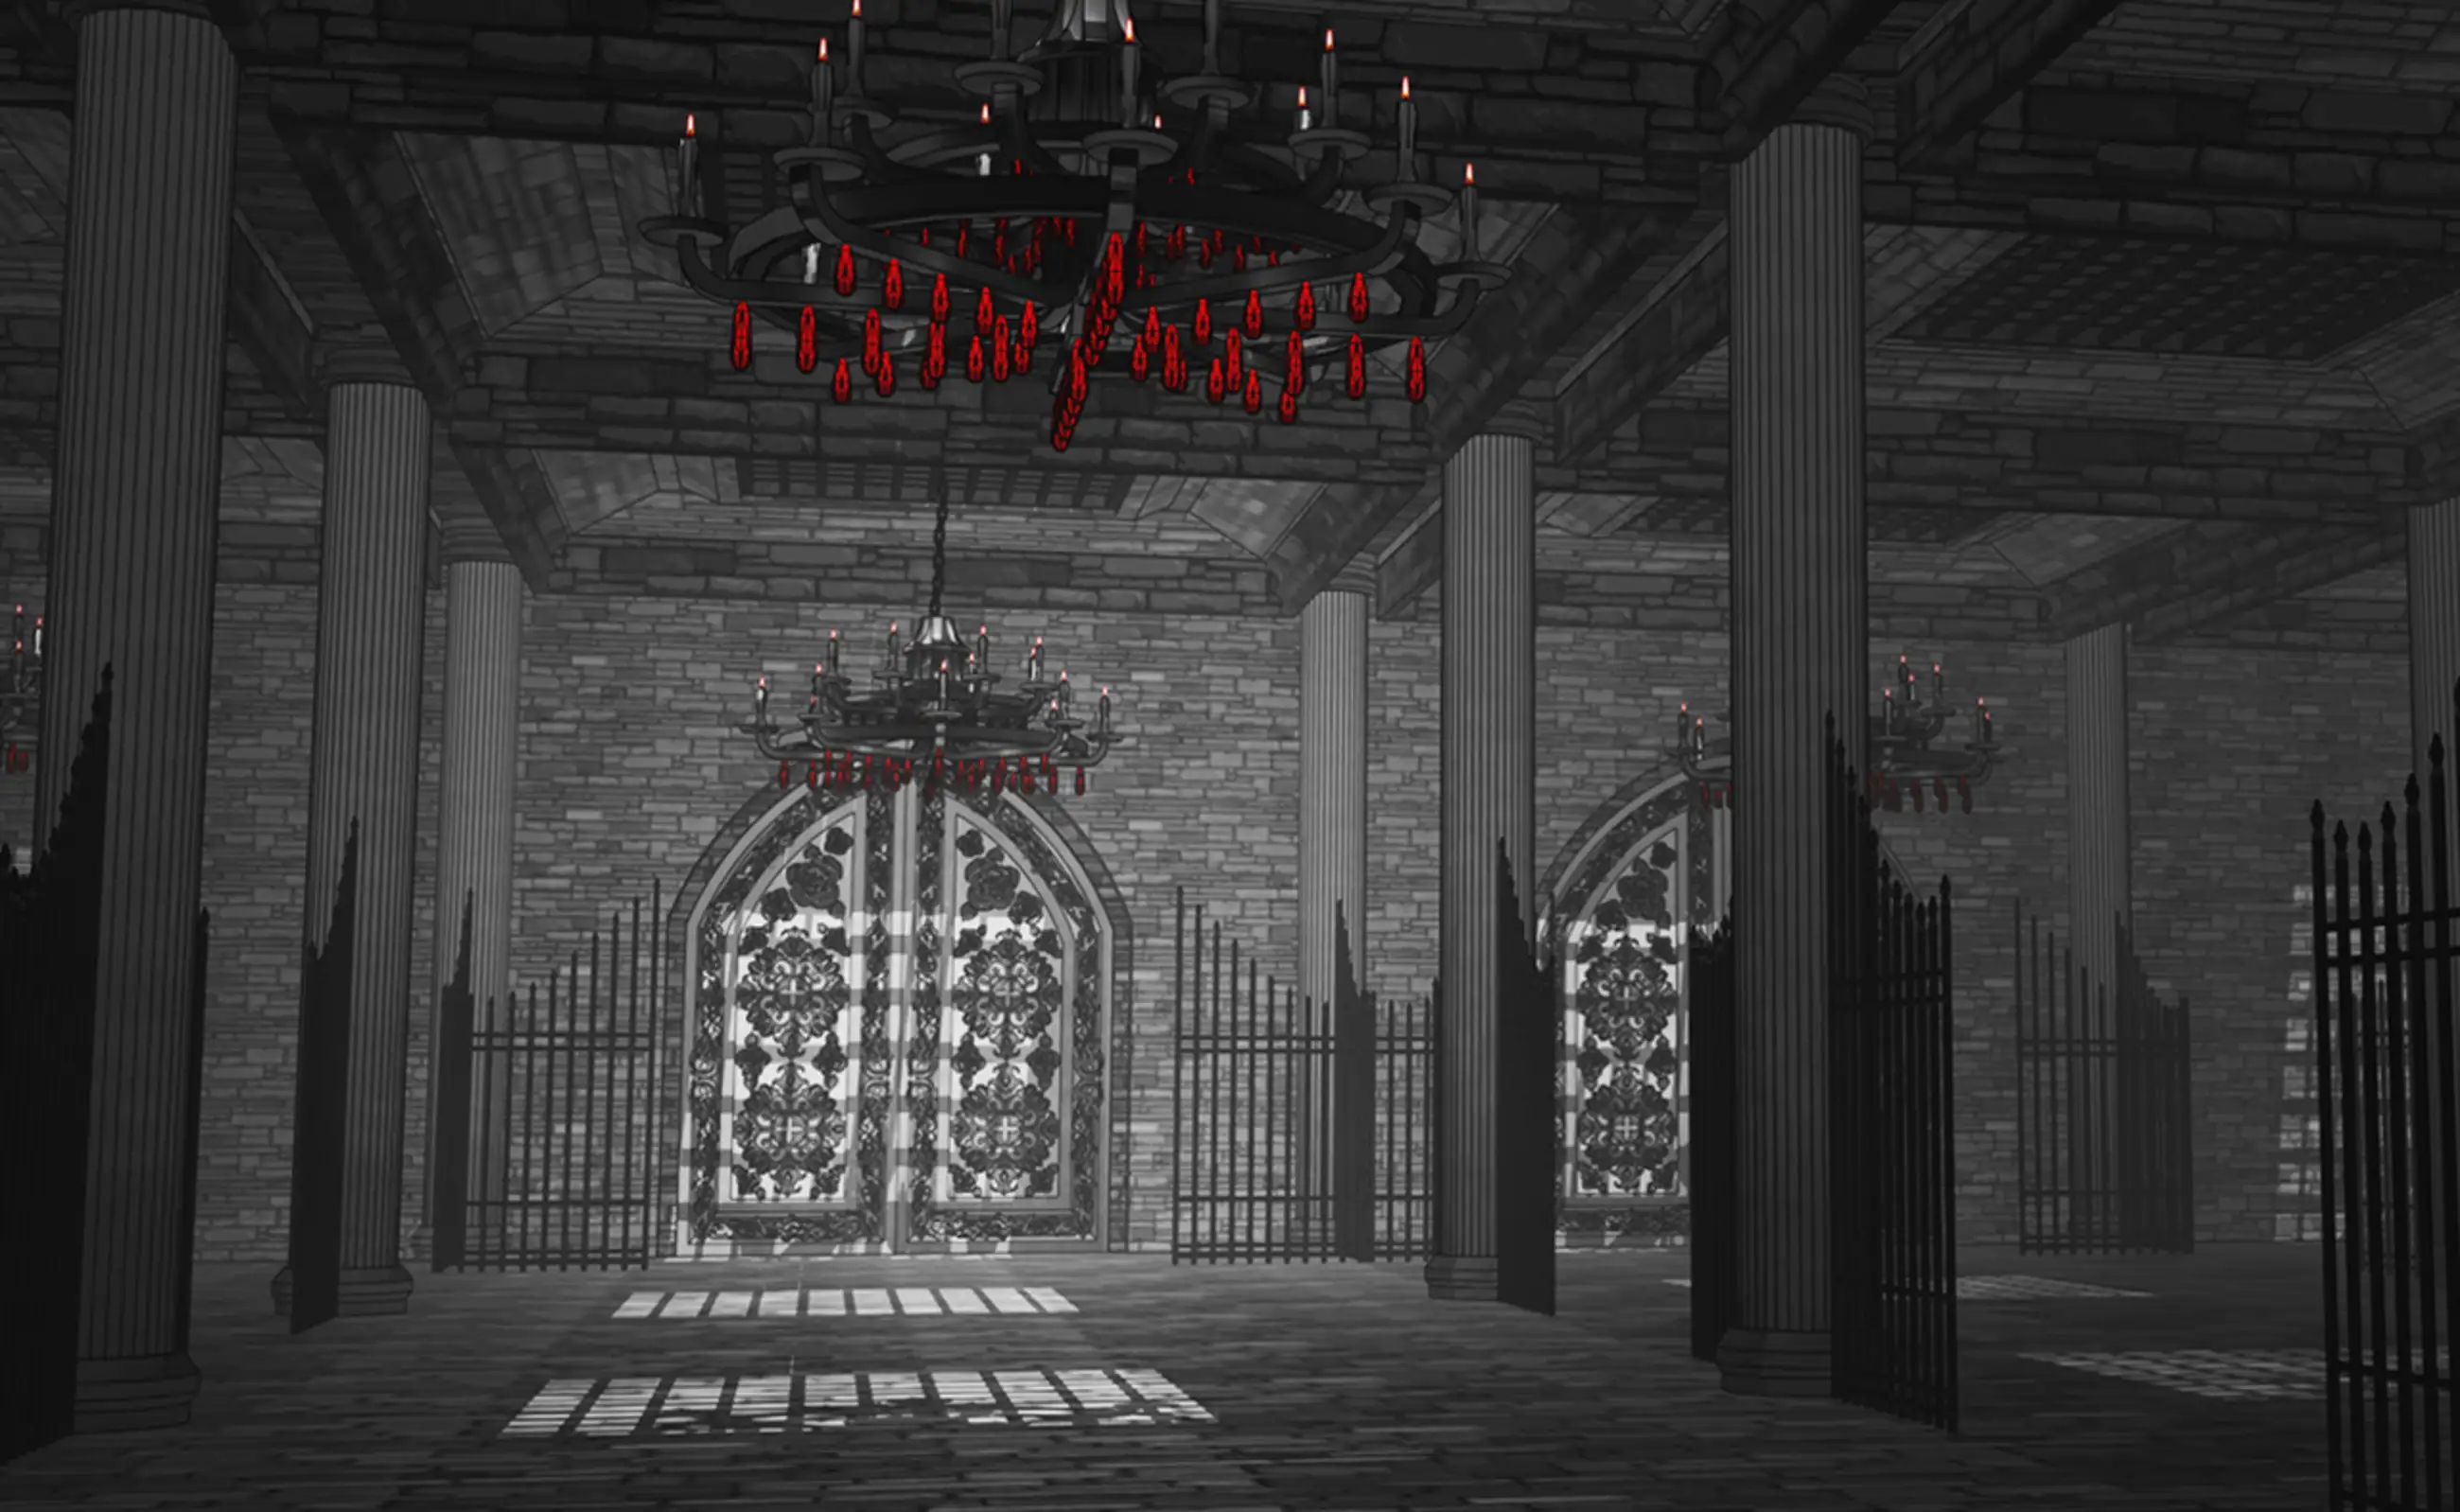 Dark Citadel interior and exterior webtoon sketchup background set